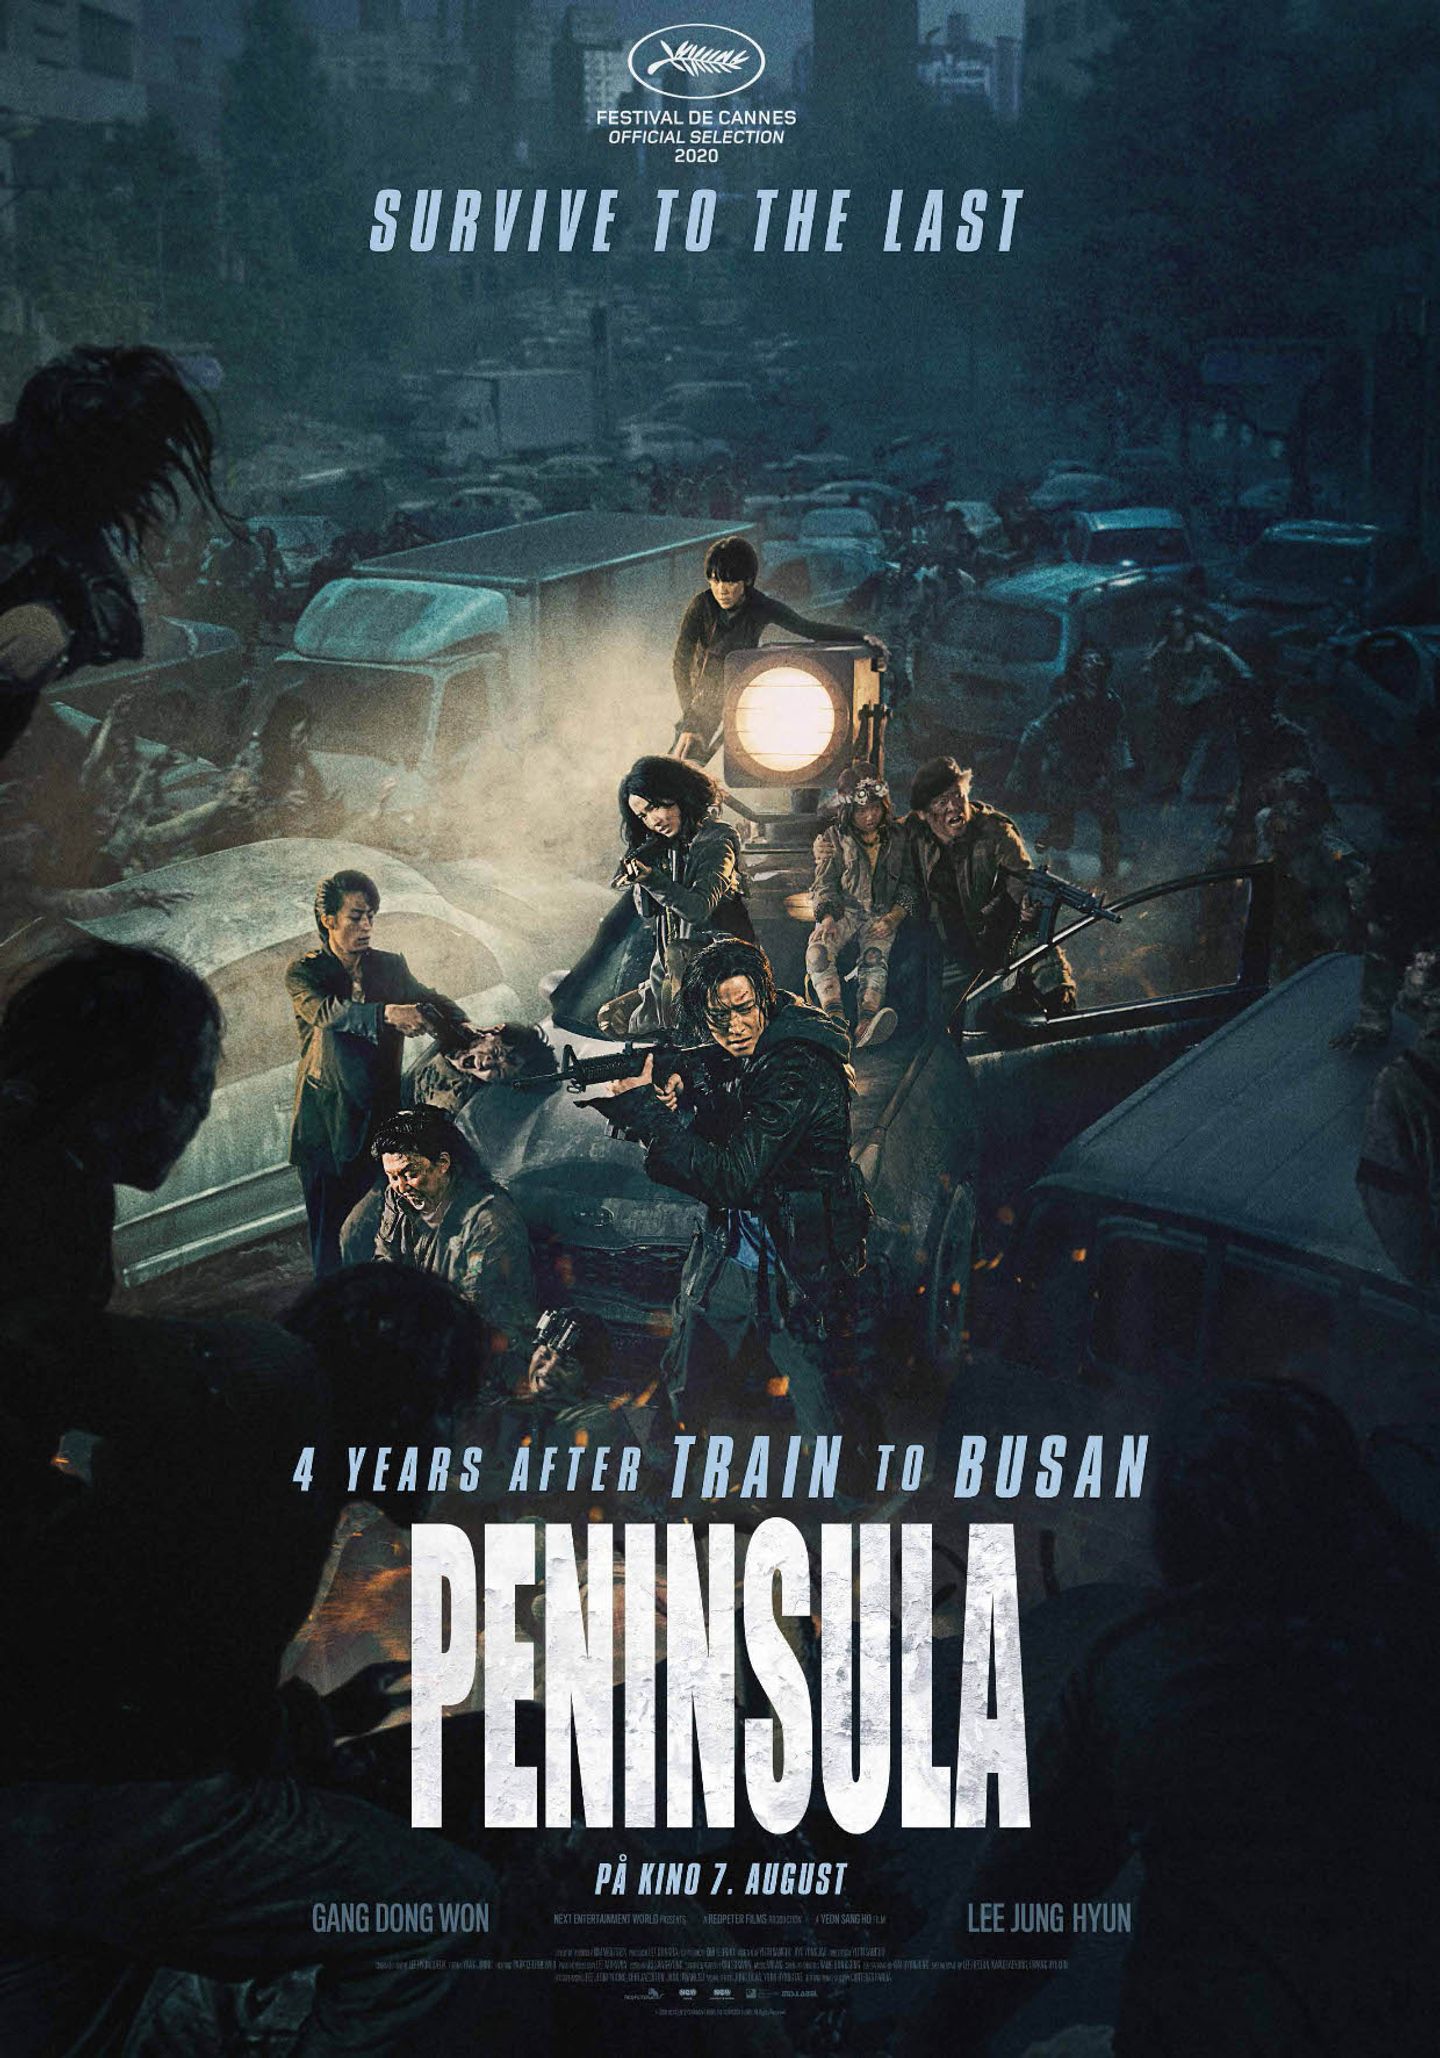 Plakat for 'Peninsula'